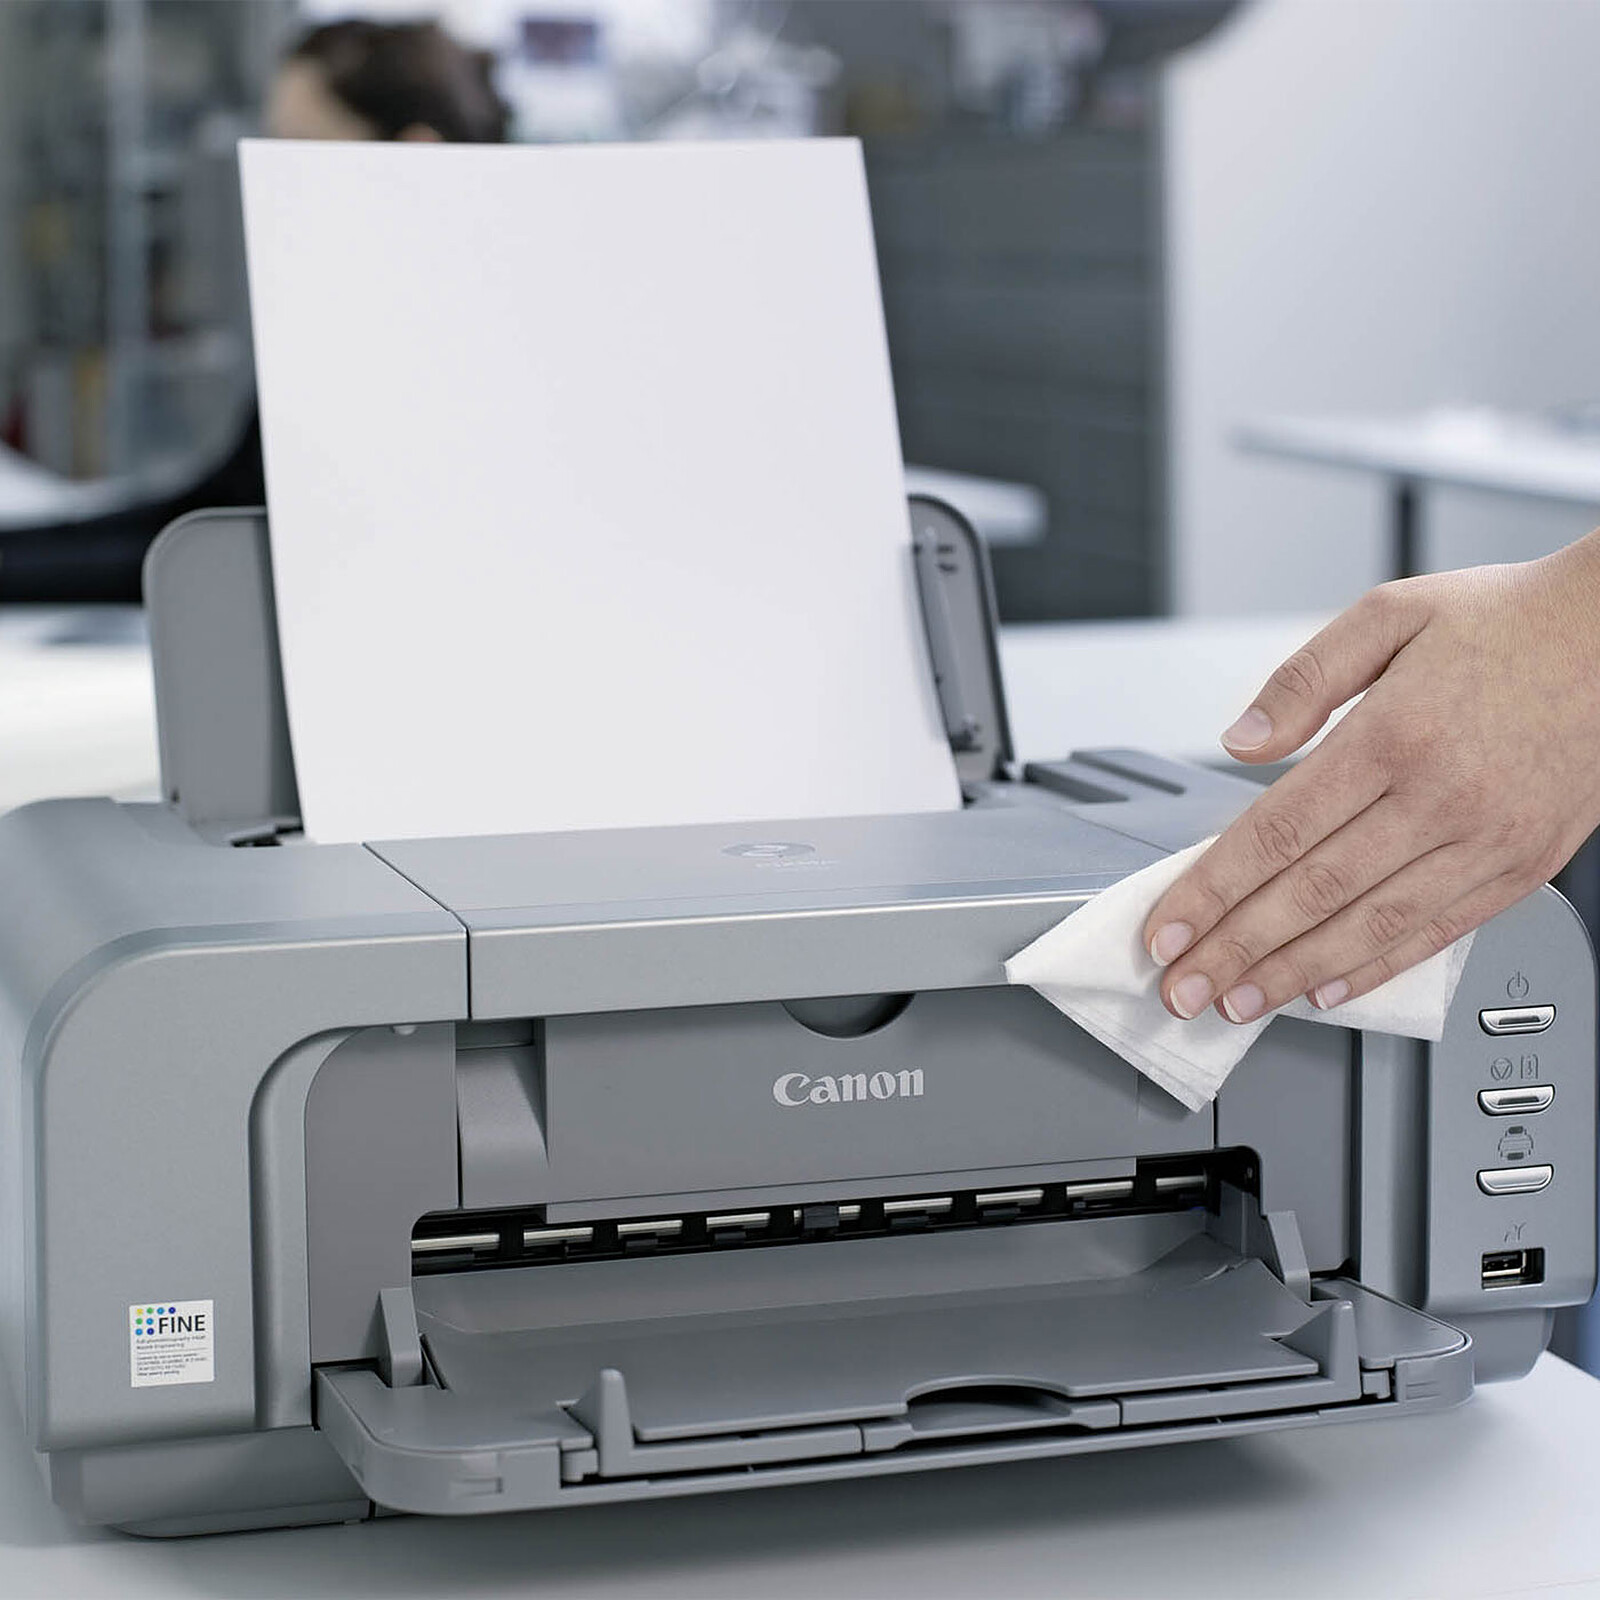 canon ip3000 printer review